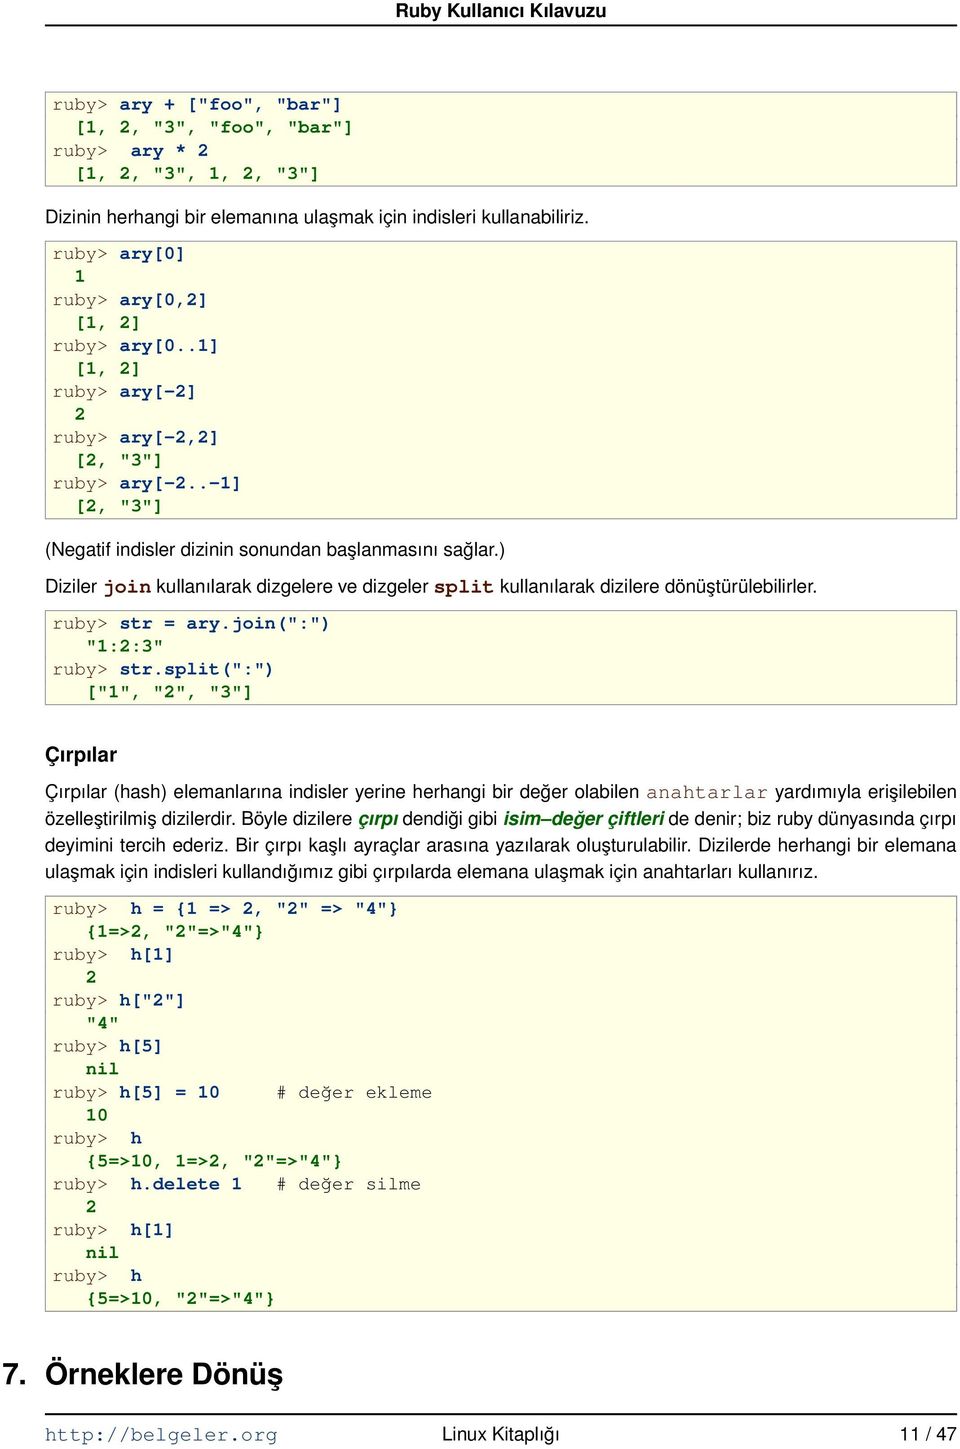 ) Diziler join kullanılarak dizgelere ve dizgeler split kullanılarak dizilere dönüştürülebilirler. ruby> str = ary.join(":") "1:2:3" ruby> str.